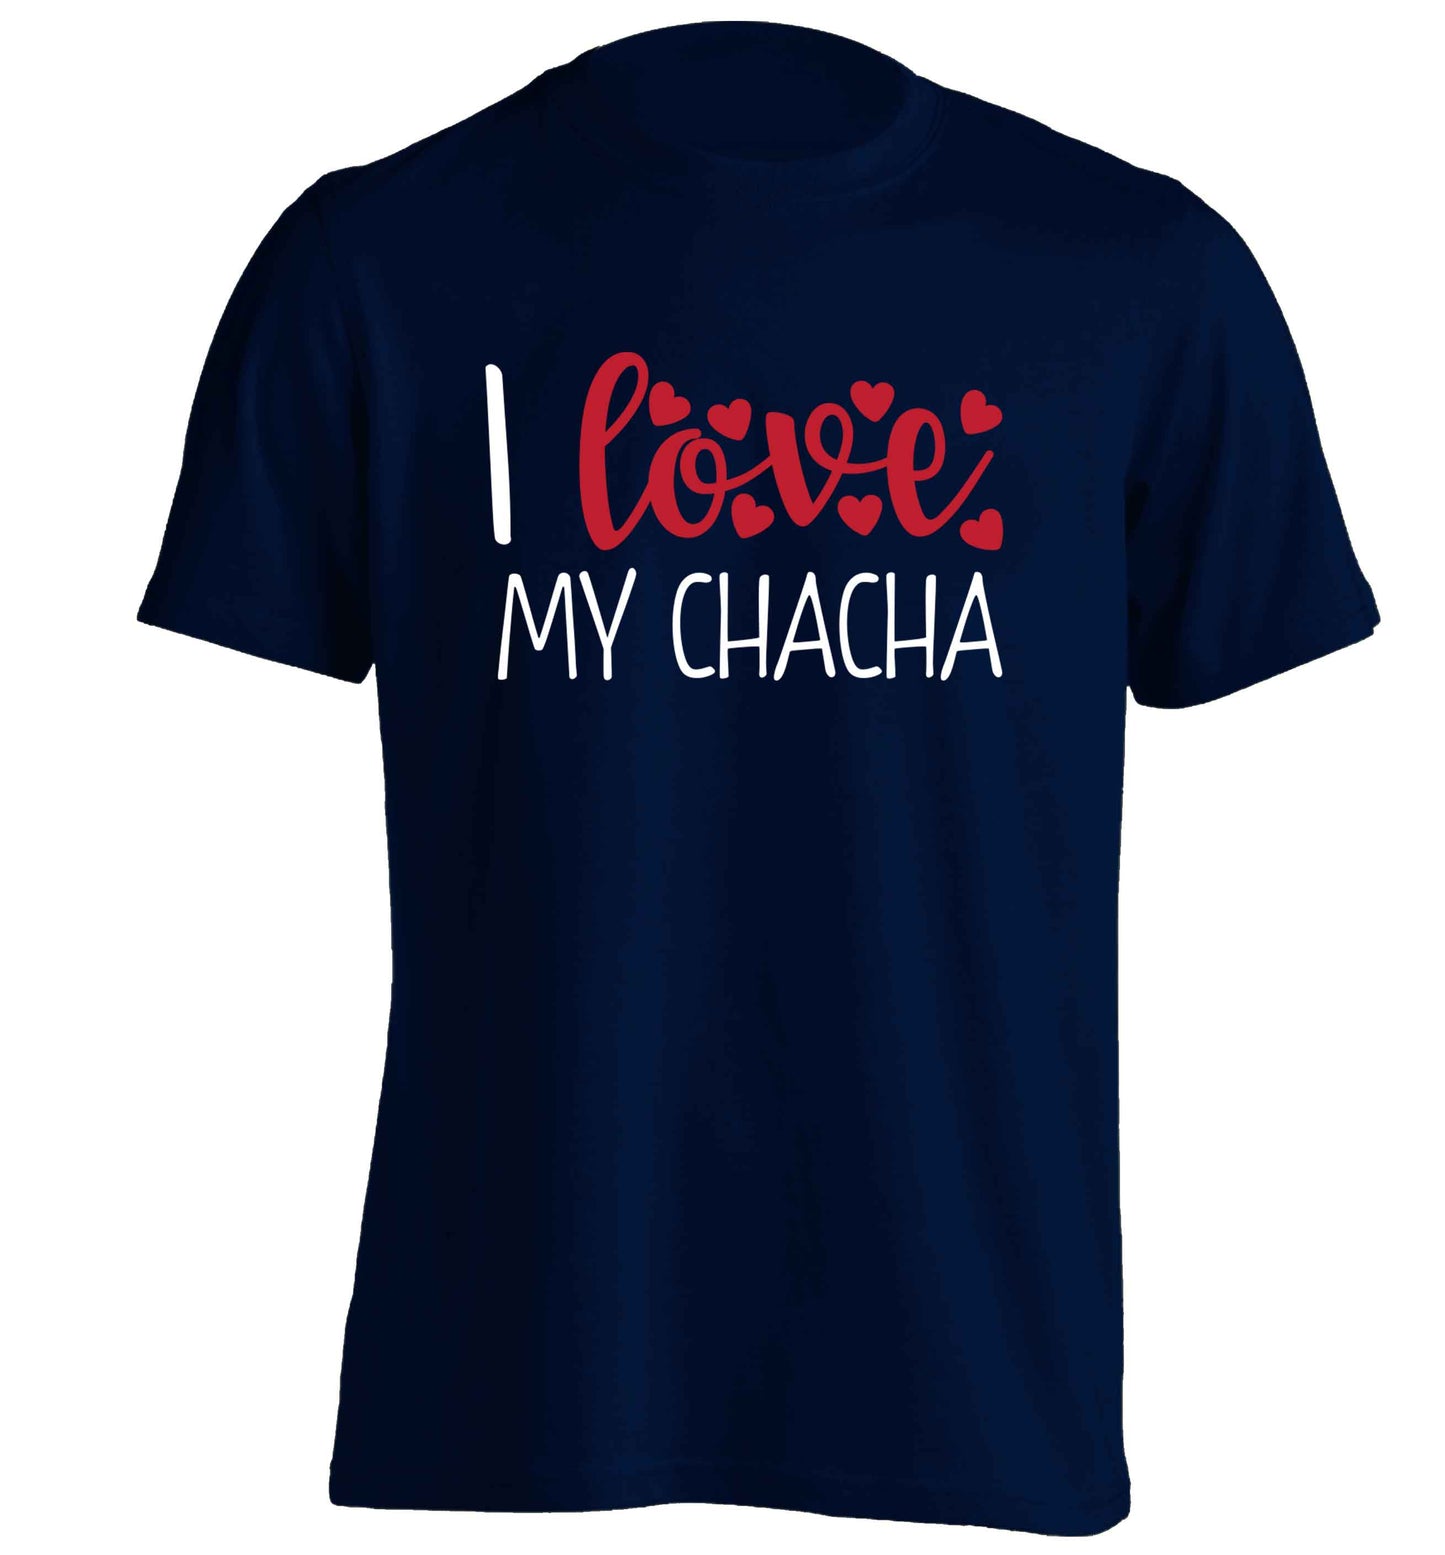 I love my chacha adults unisex navy Tshirt 2XL